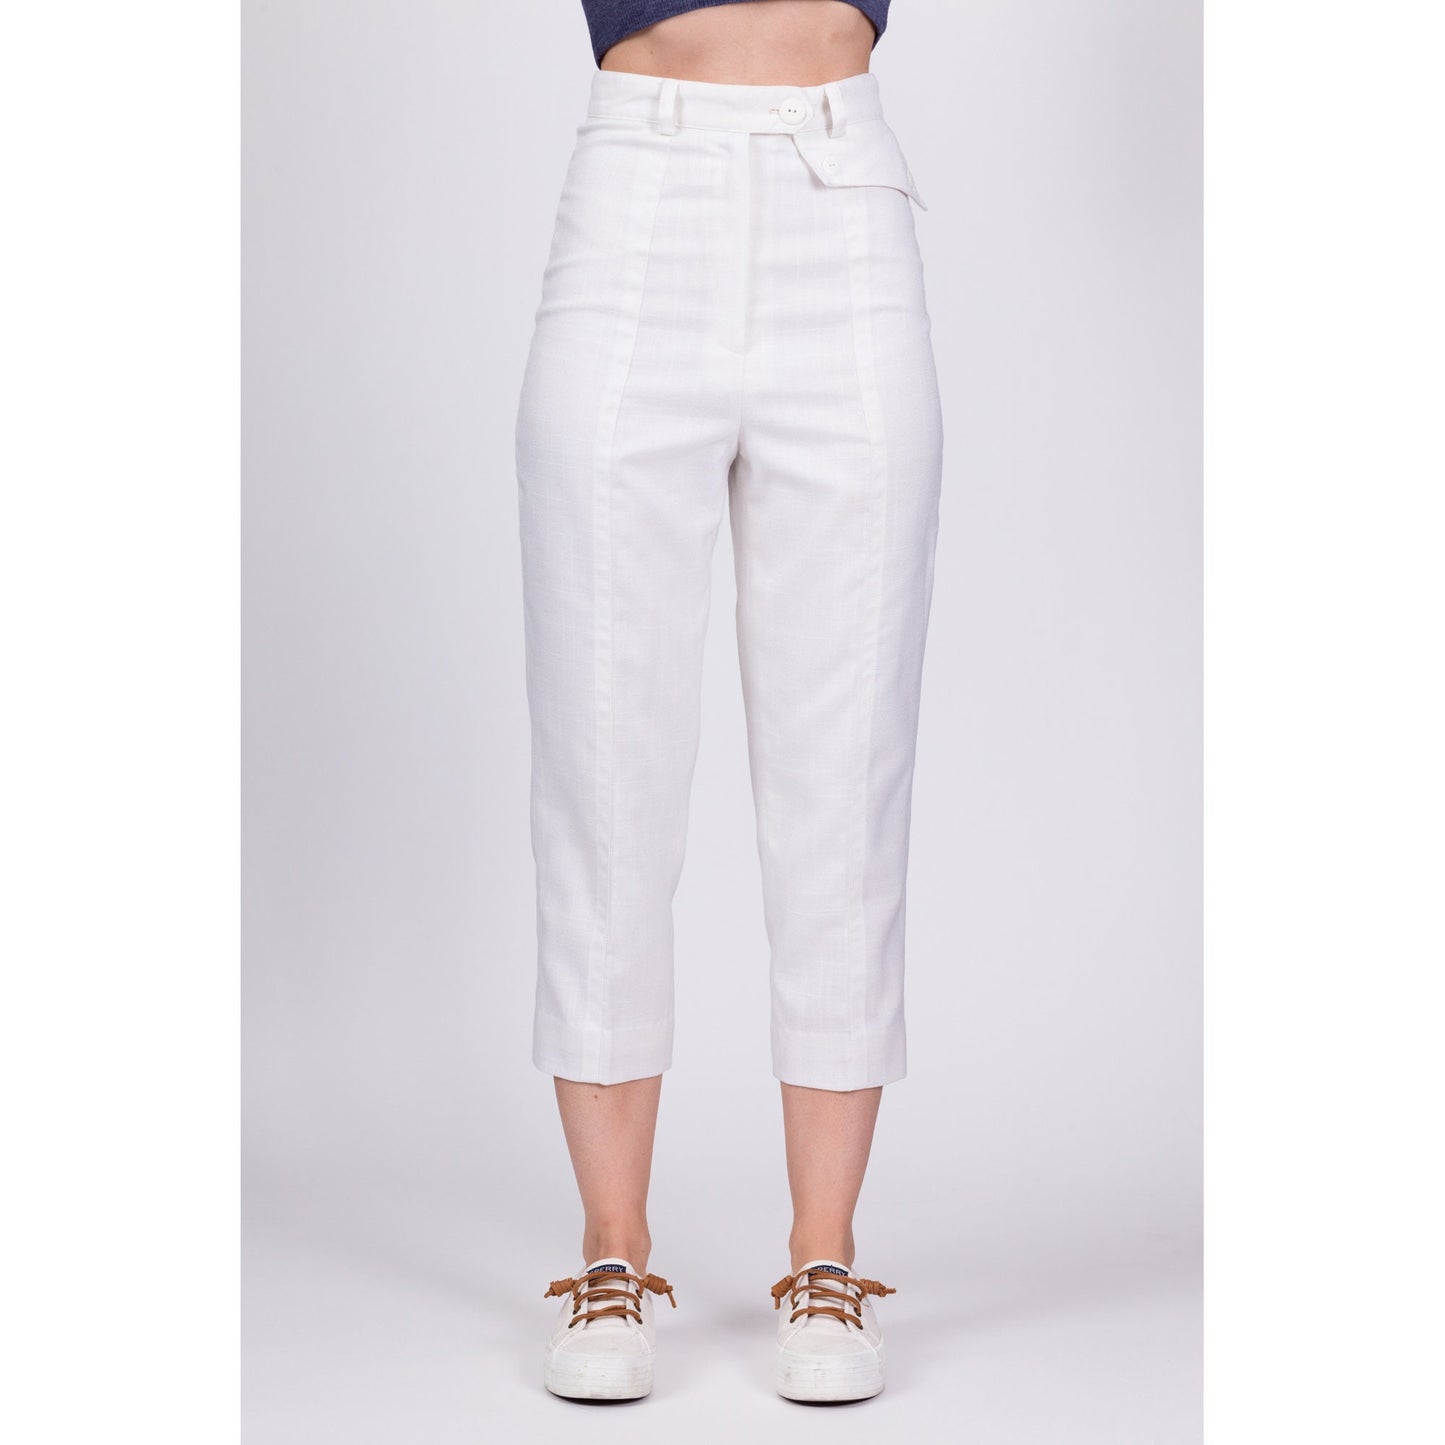 80s White High Waisted Capri Pants - Petite Extra Small, 23" 